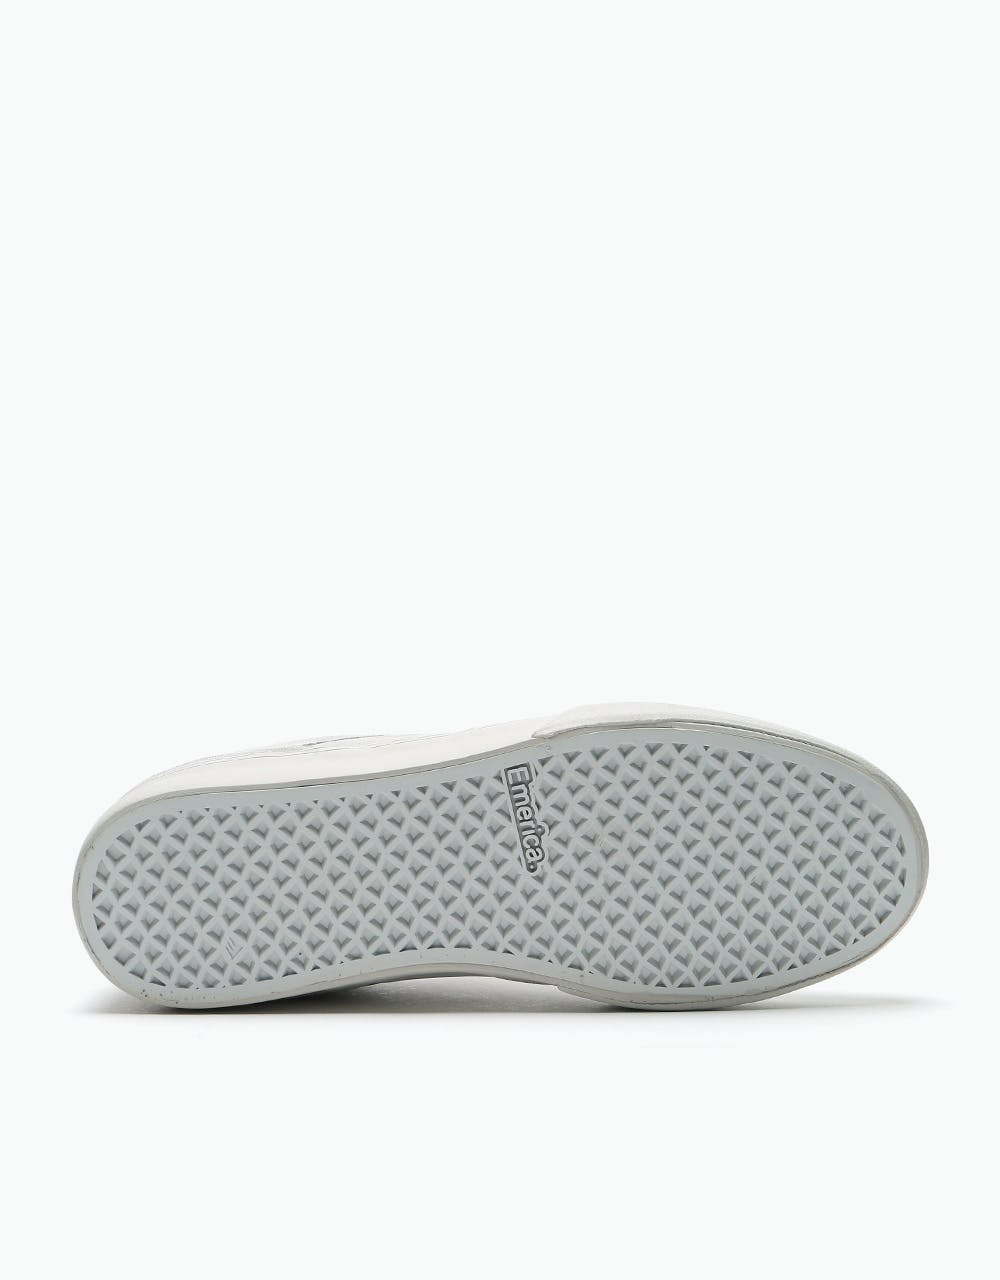 Emerica The Low Vulc Skate Shoes - Grey